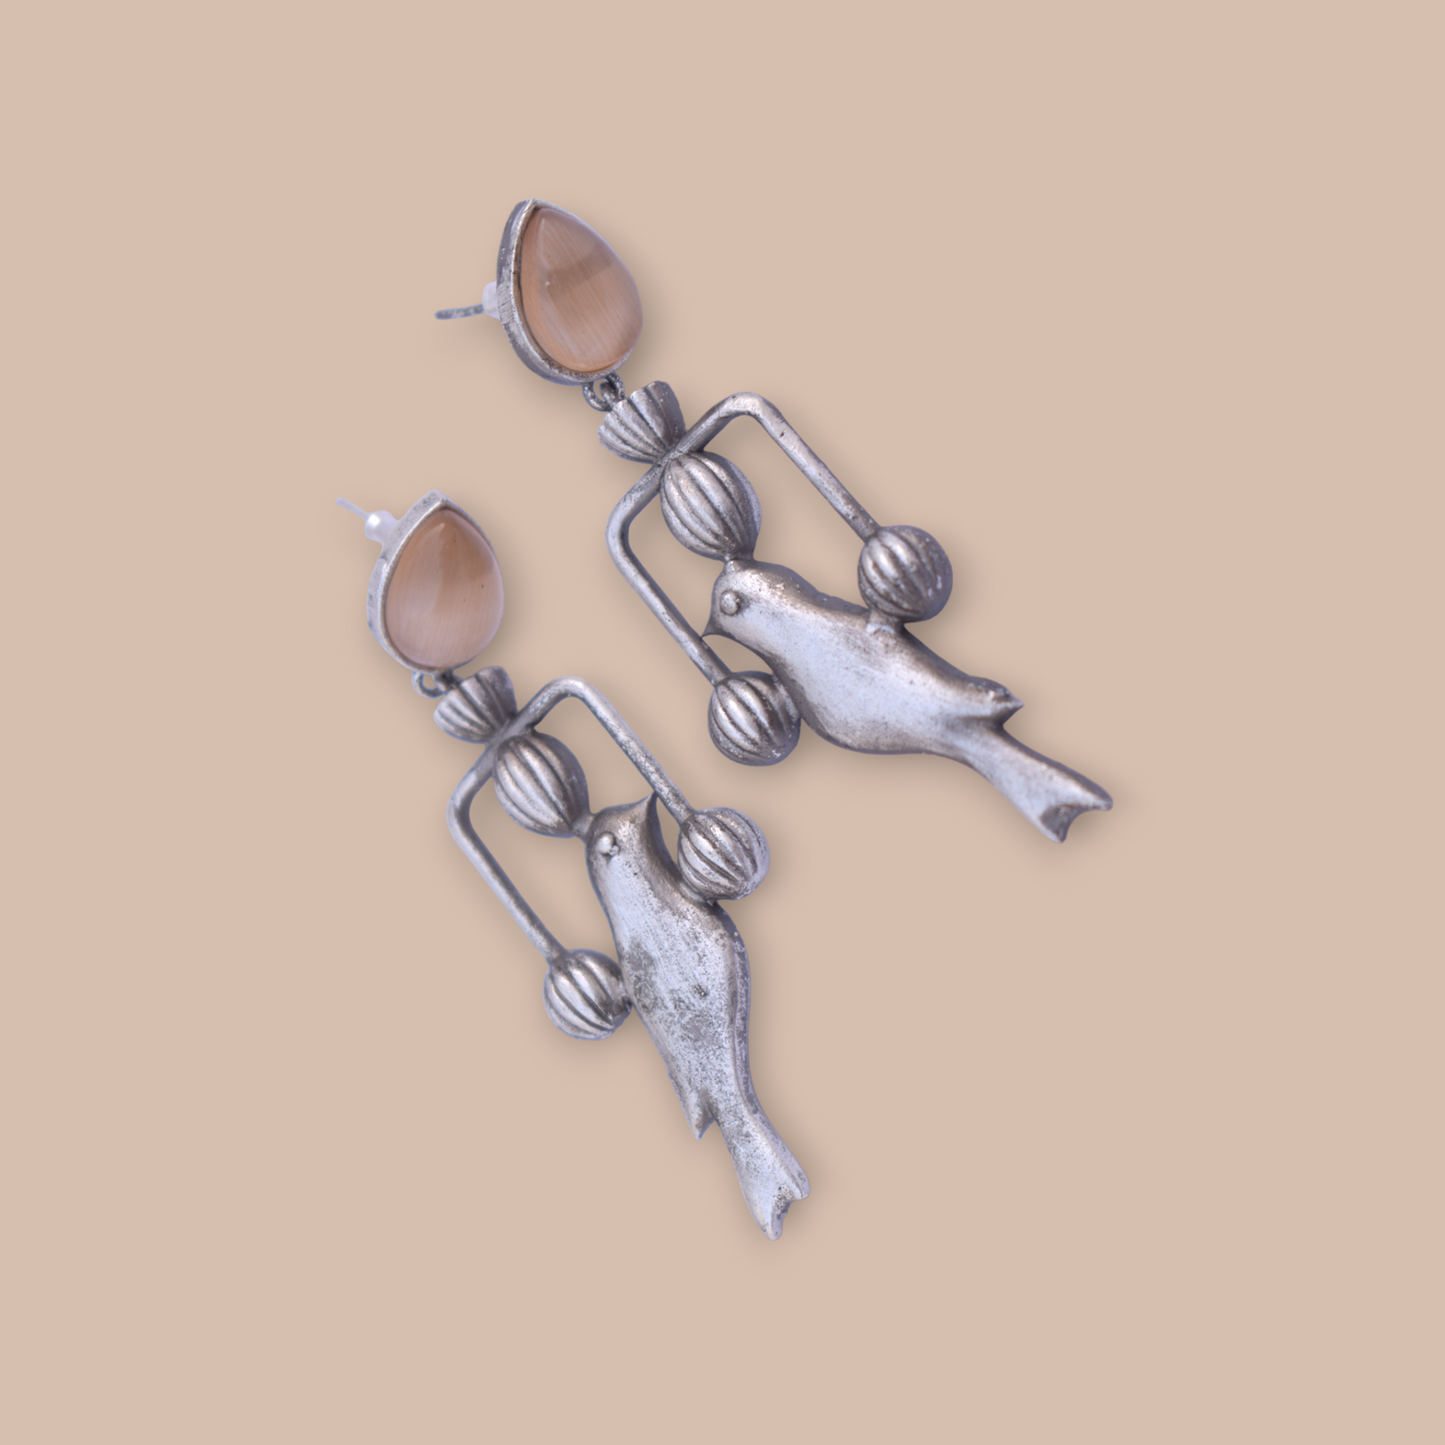 A pair of silver look alike bird earing